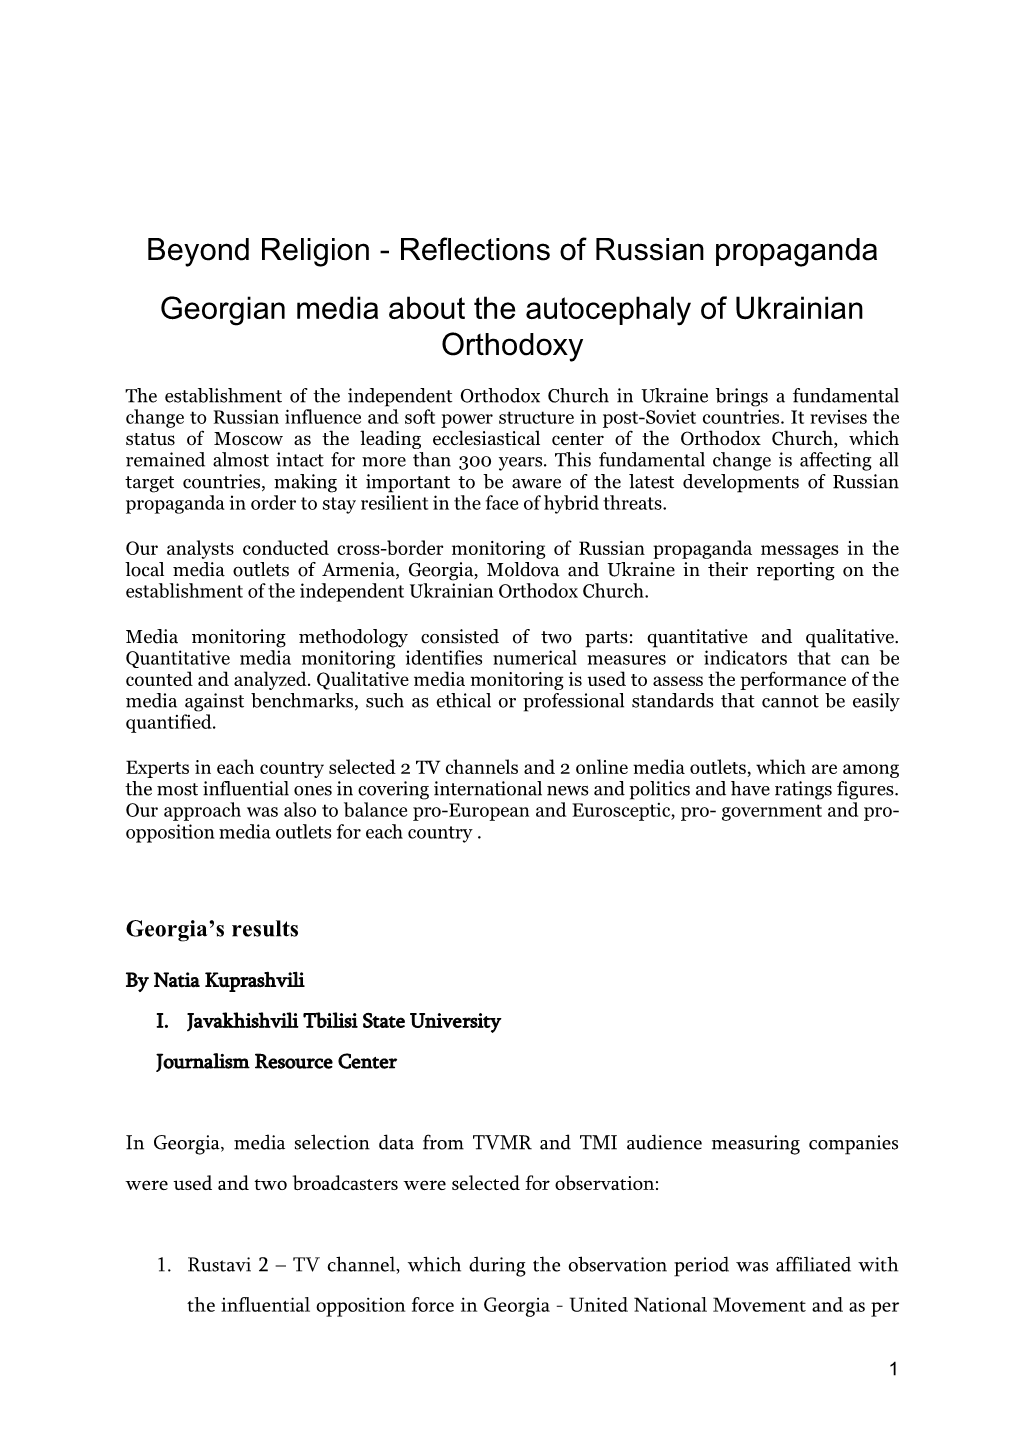 Reflections of Russian Propaganda Georgian Media About the Autocephaly of Ukrainian Orthodoxy